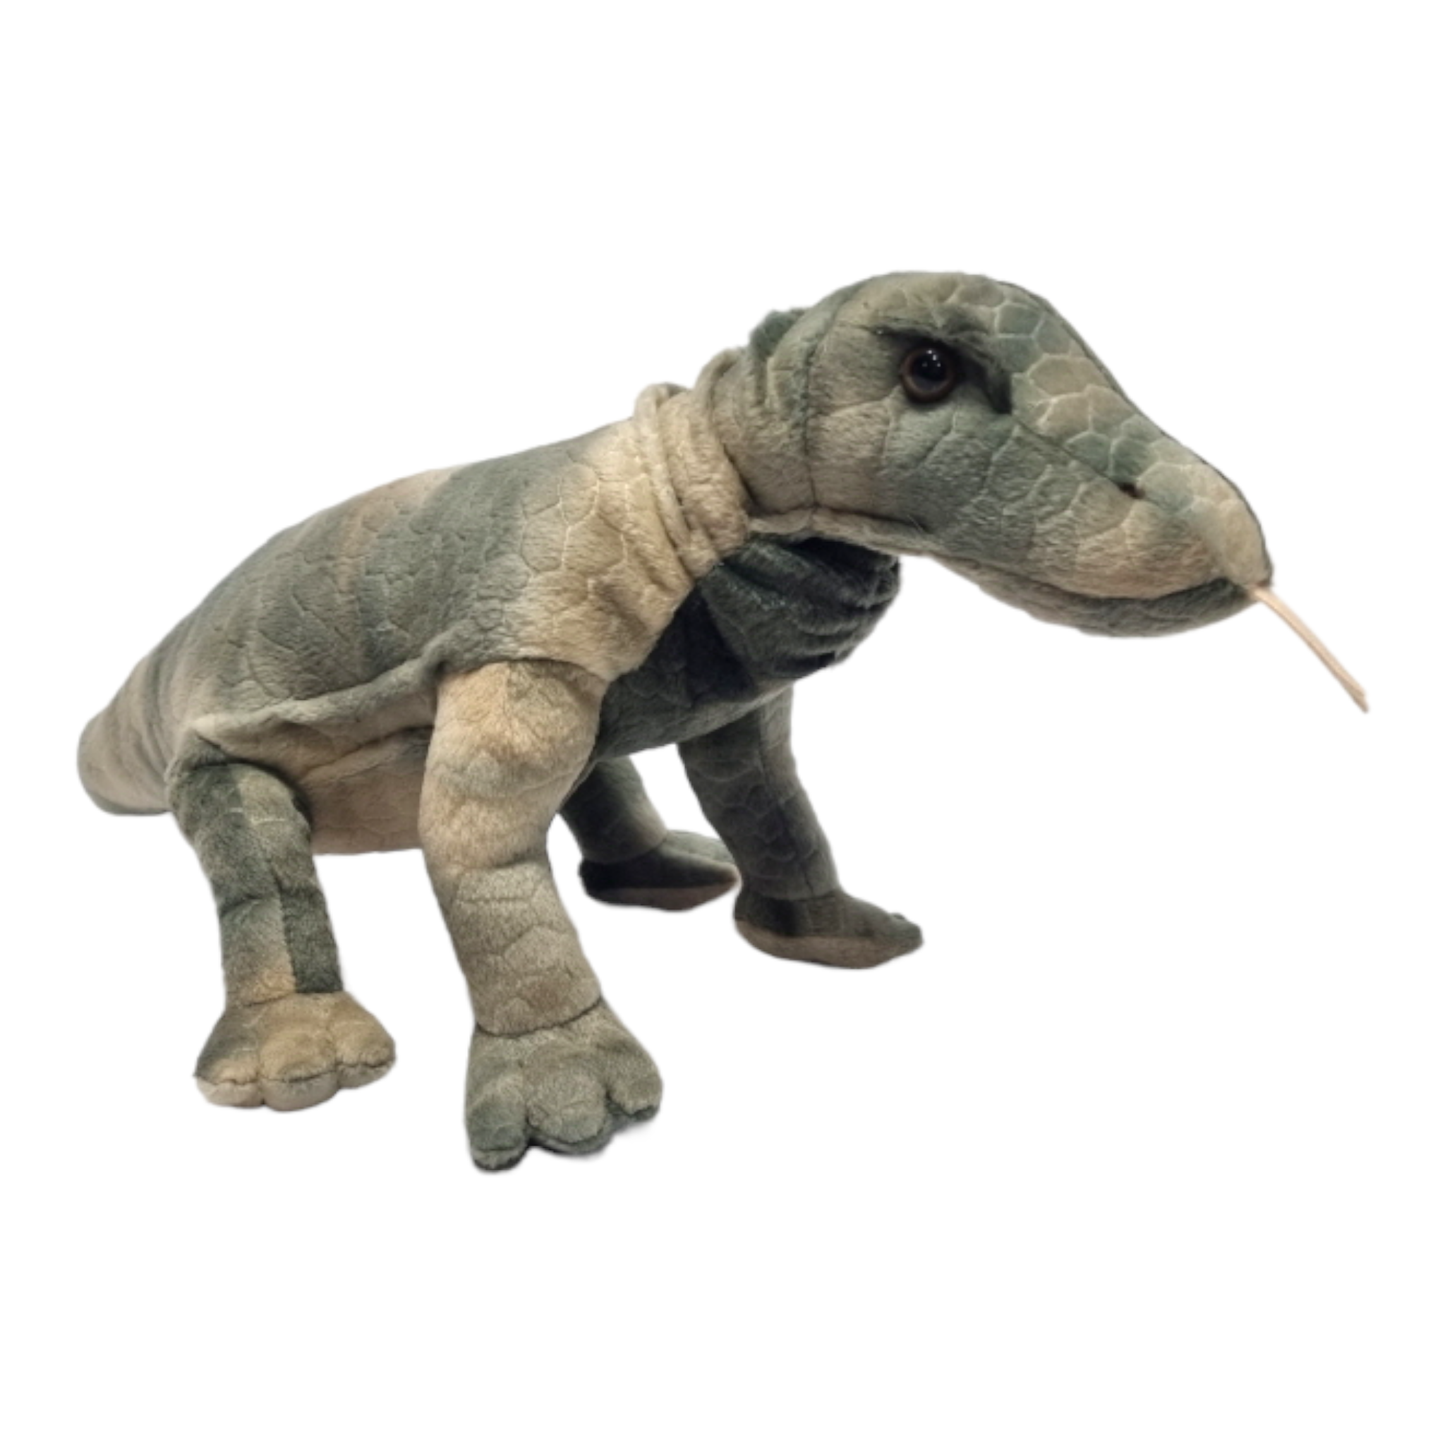 12" Plush Komodo Dragon Stuffed Animal